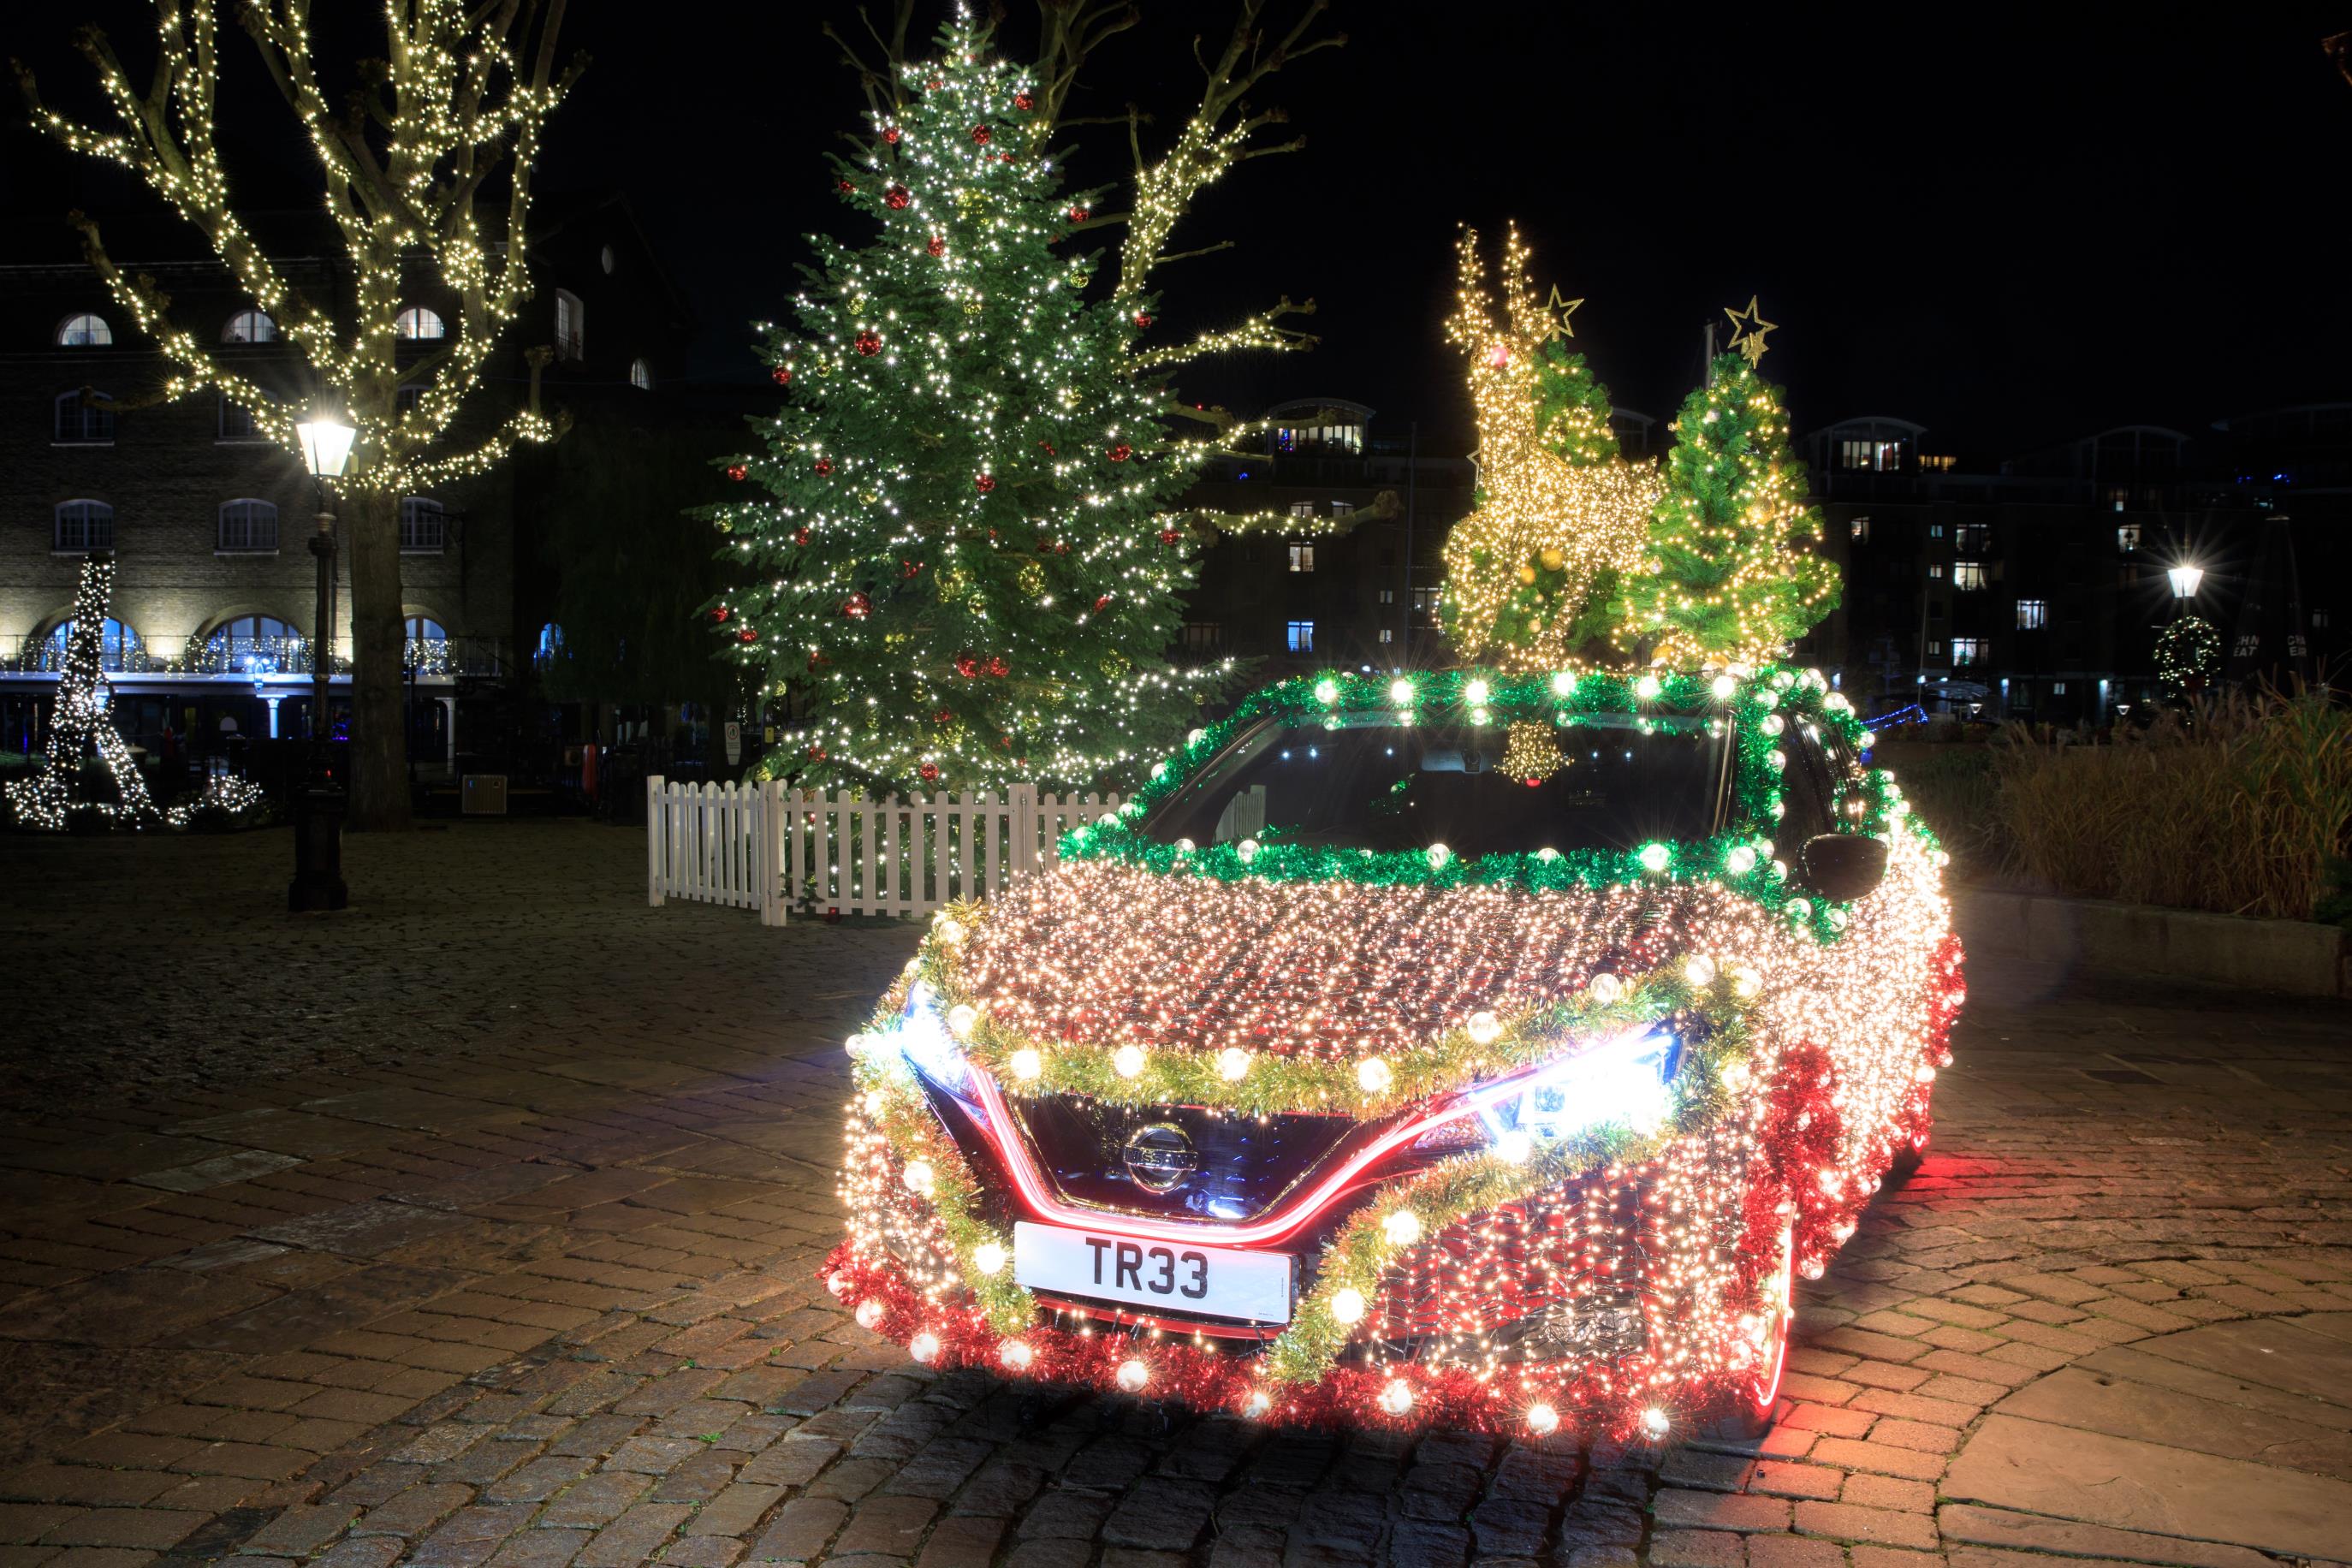 The festive Leaf features hundreds of LED lights